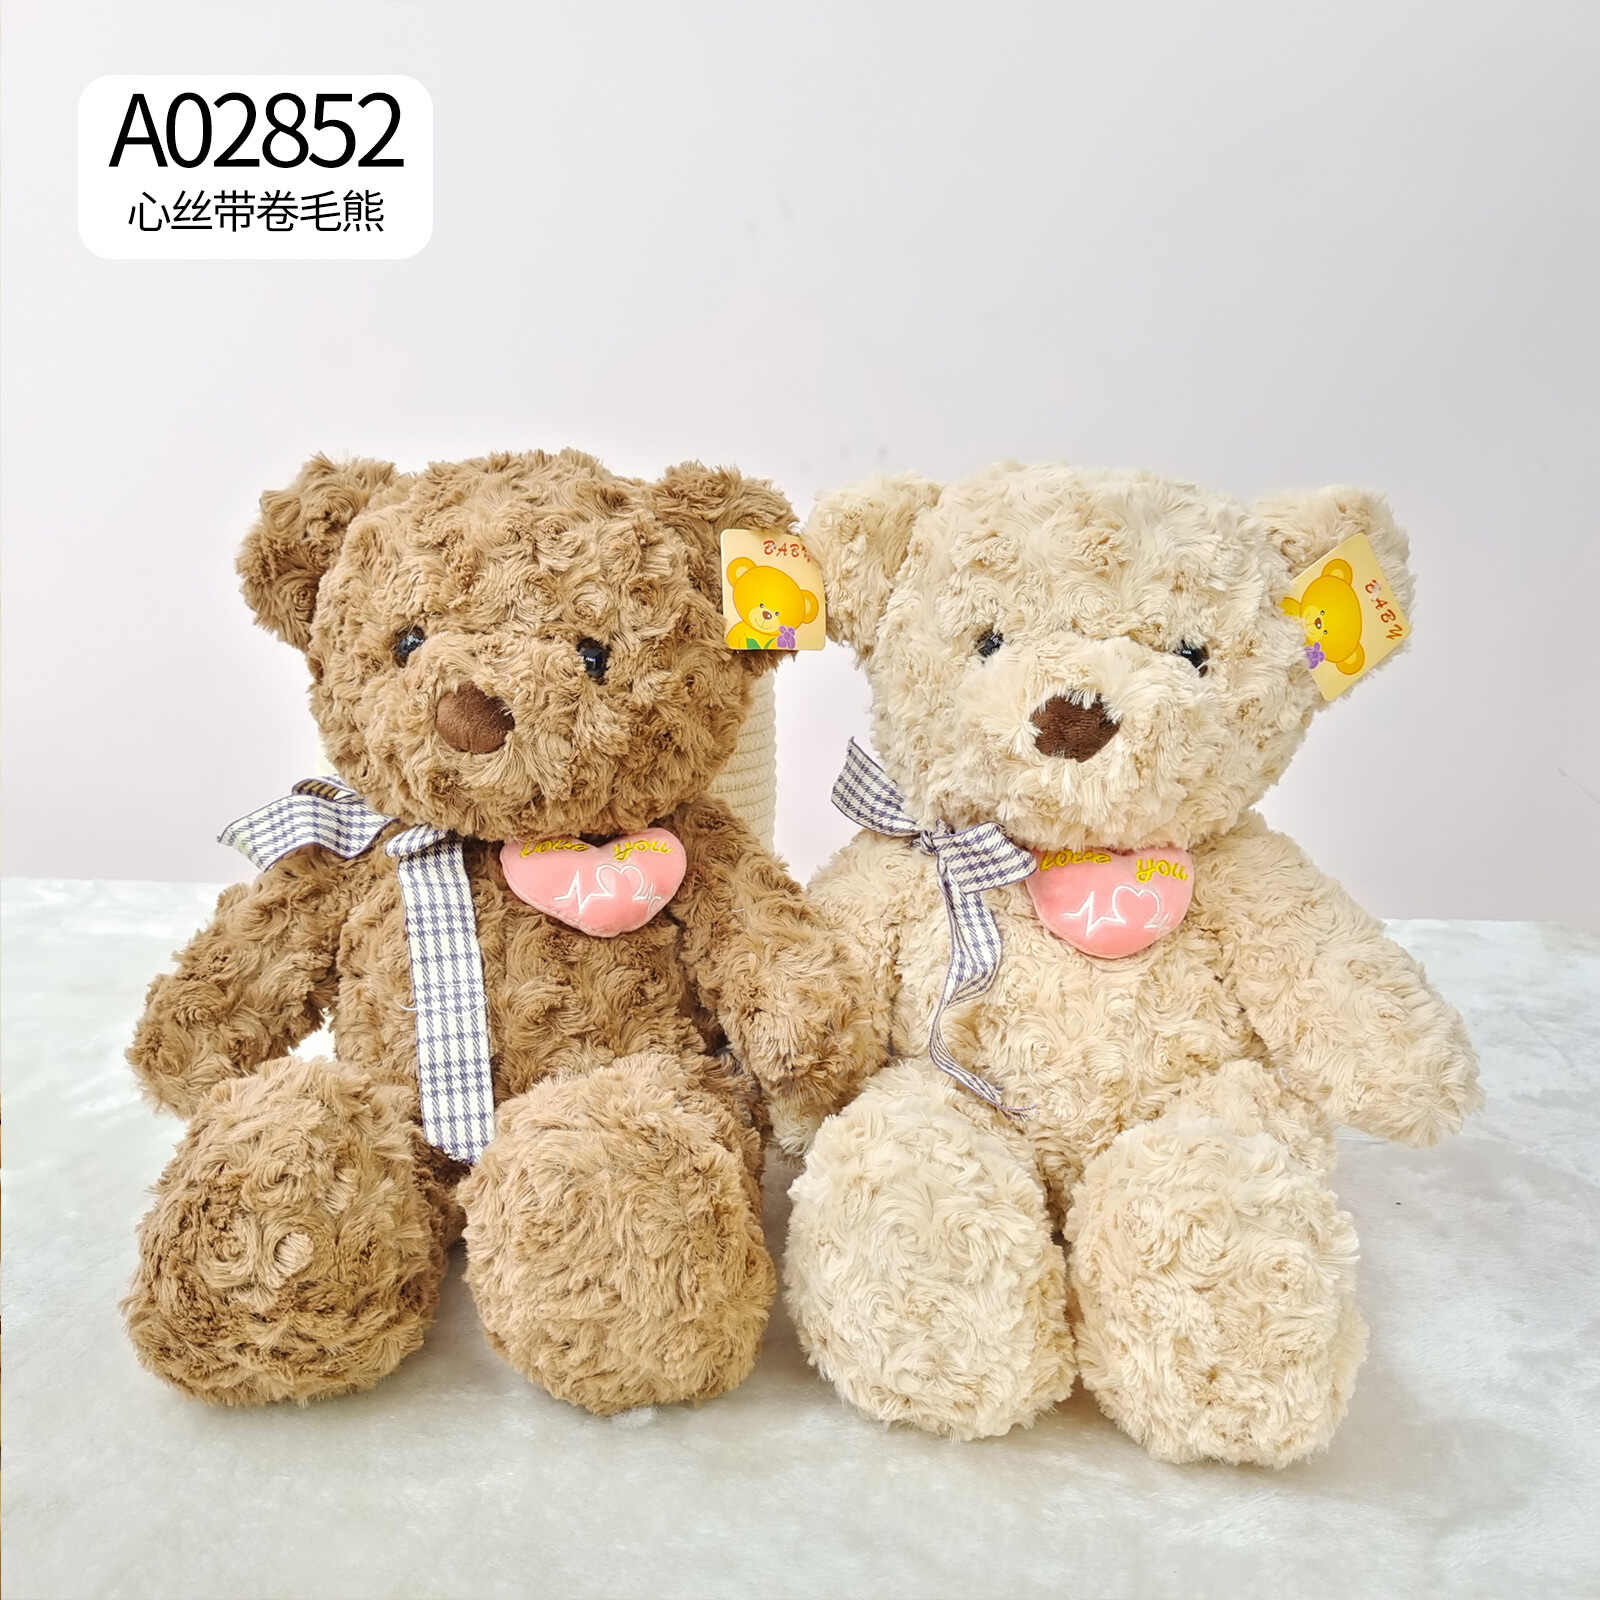 A02852 兑换 总长47cm 心丝带卷毛熊